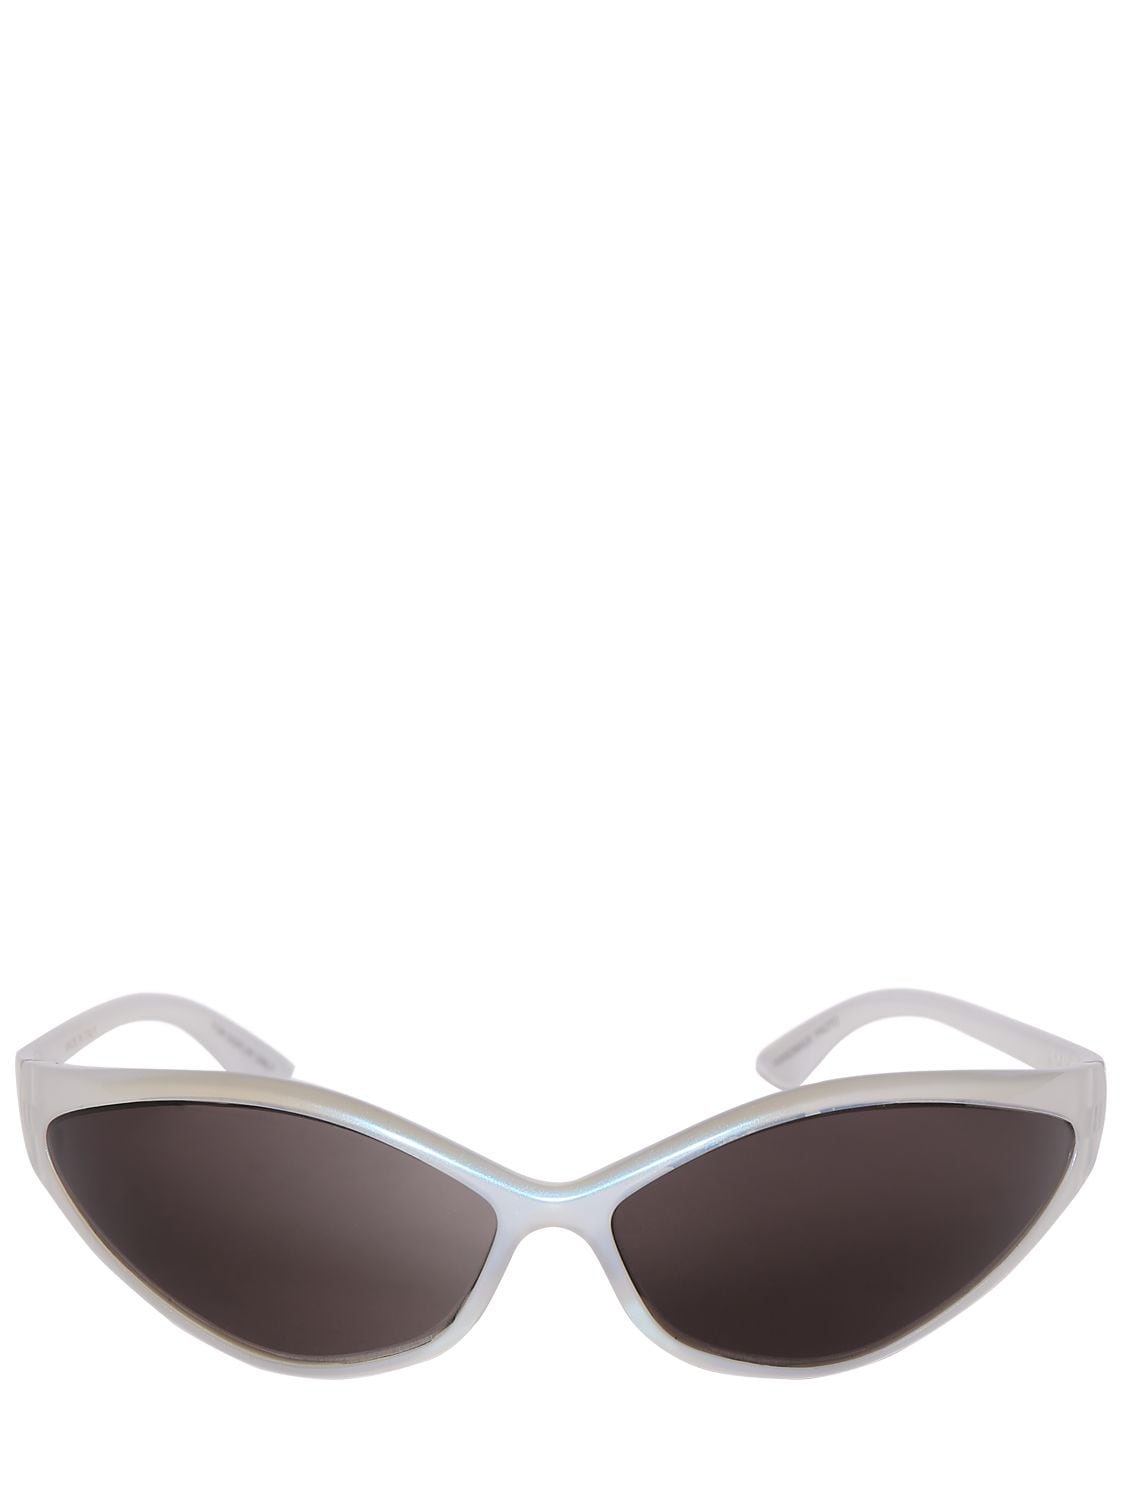 Image of 0285s 90s Oval Acetate Sunglasses